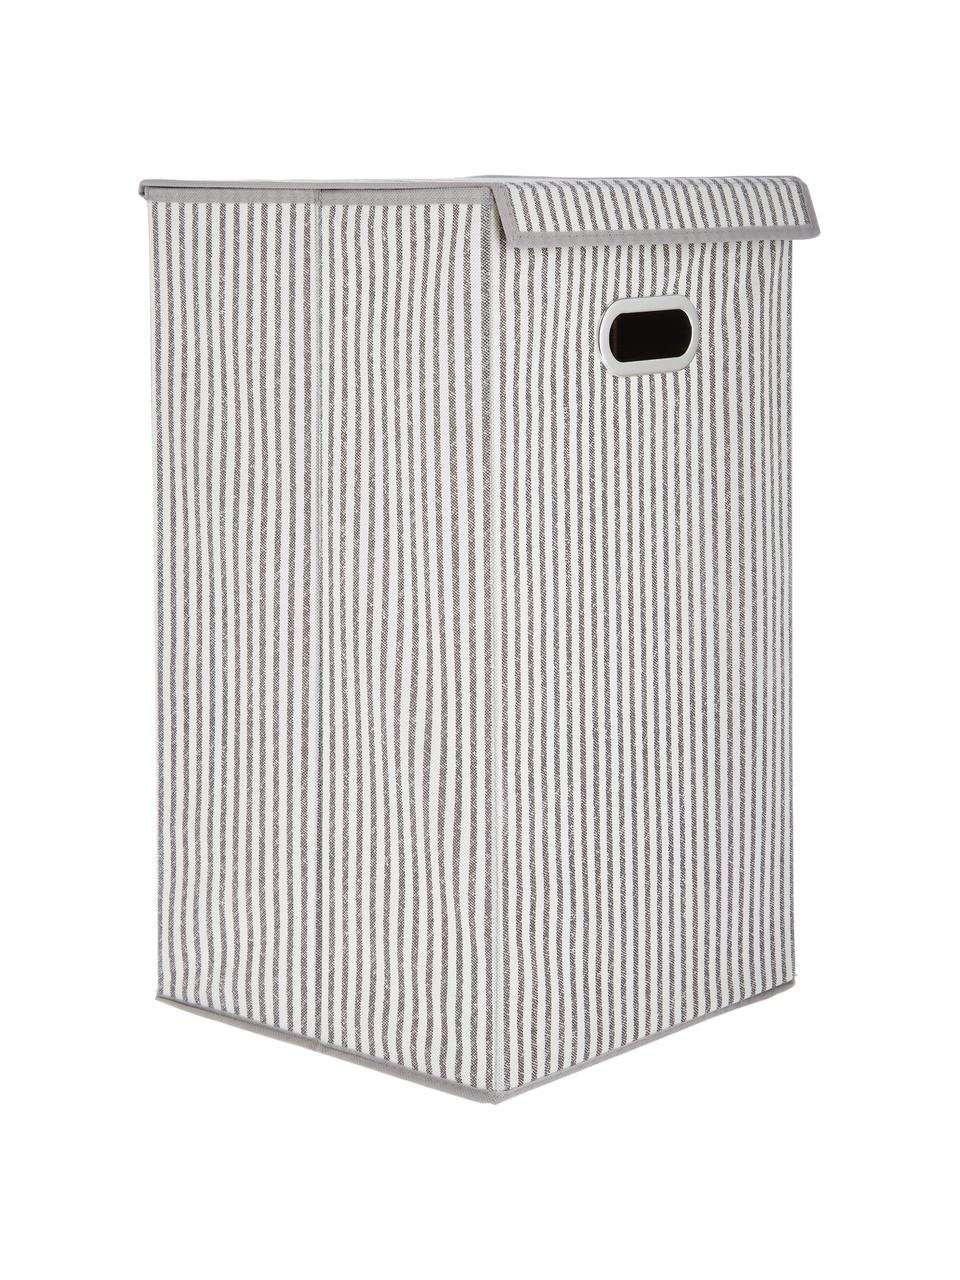 Portabiancheria Stripes, Manico: metallo, Beige, color crema, Larg. 32 x Alt. 57 cm